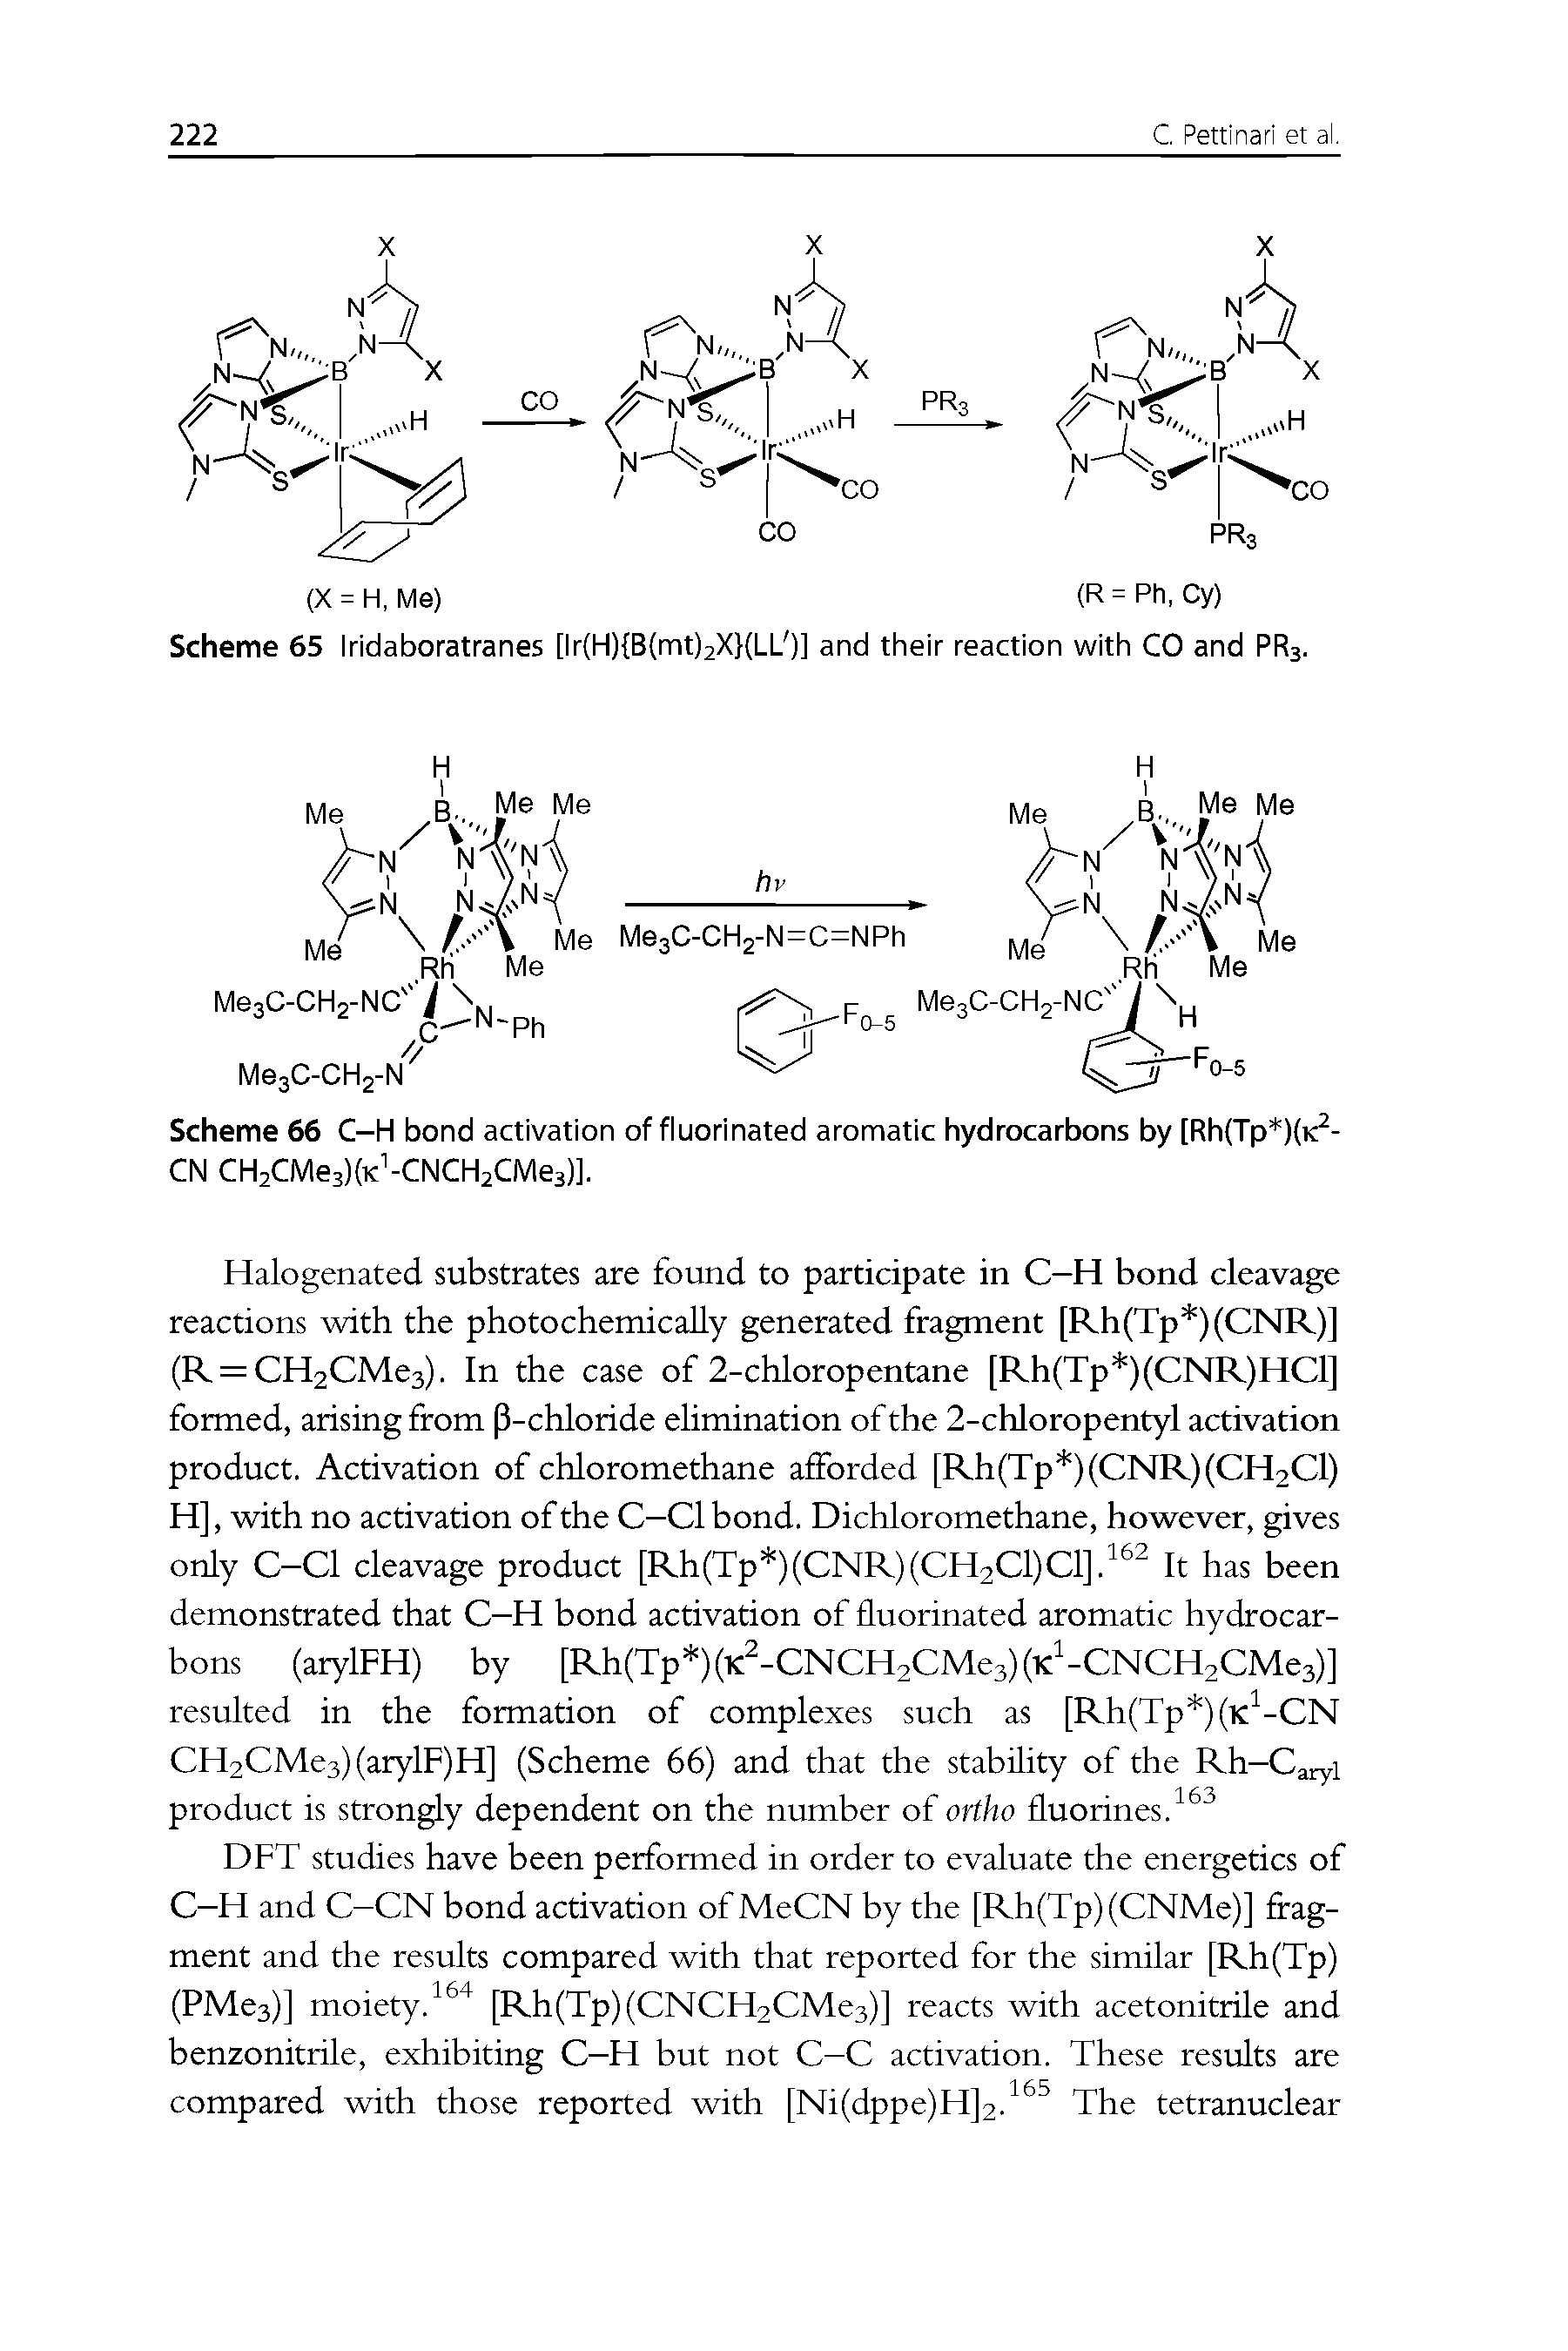 Scheme 66 C-H bond activation of fluorinated aromatic hydrocarbons by [Rh(Tp )(K -CN CH2CMe3)(K -CNCH2CIVle3)].